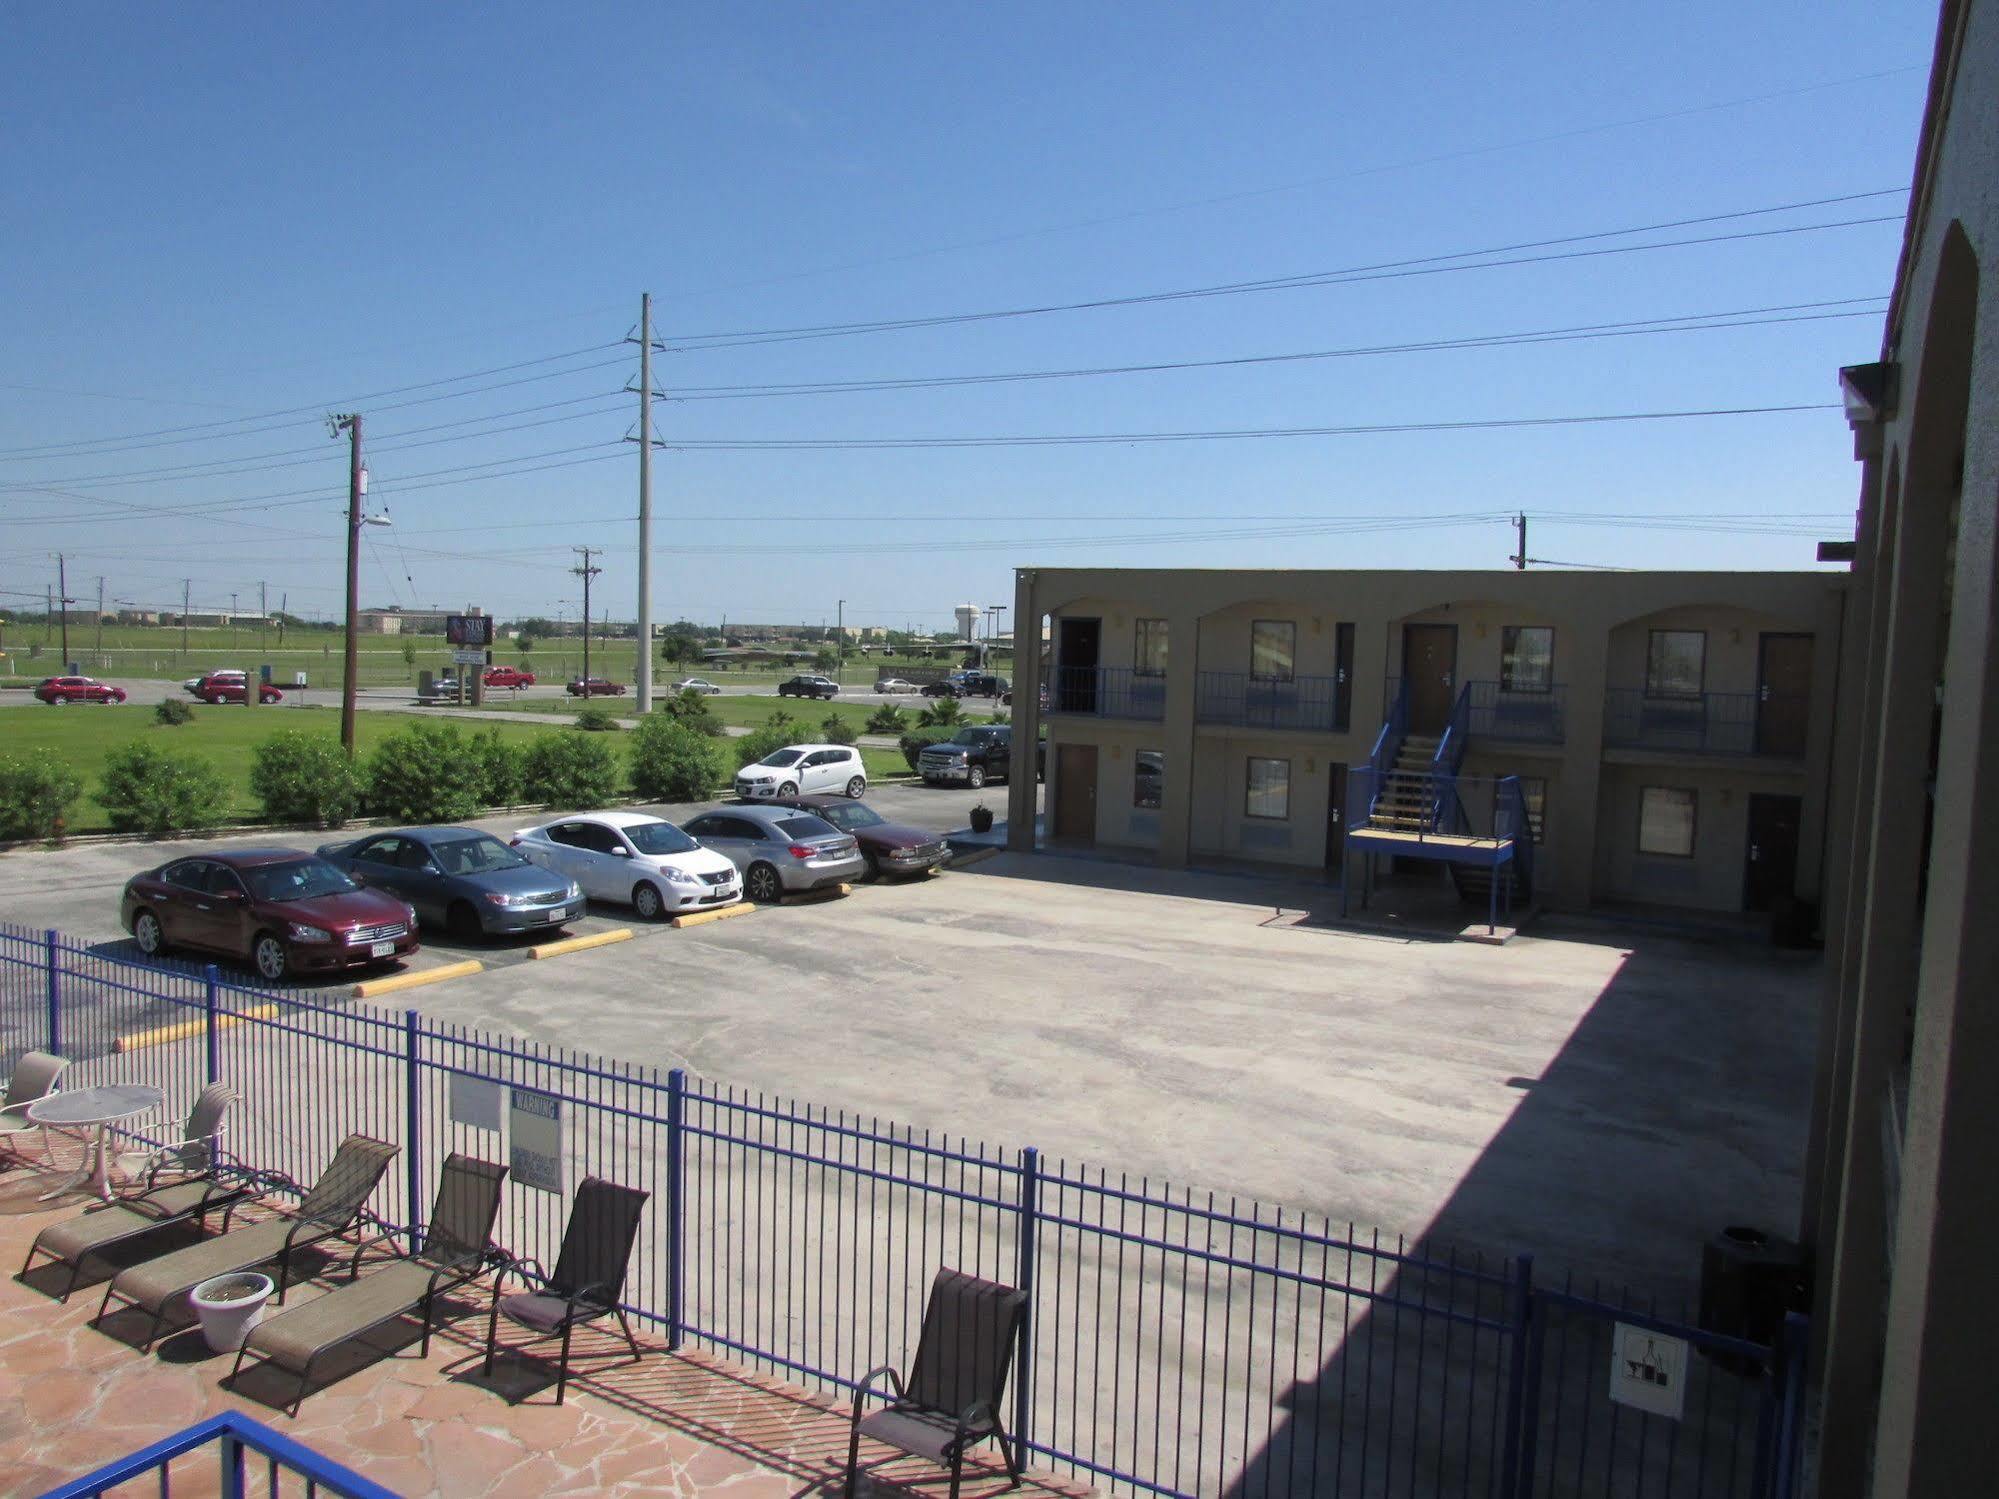 Oyo Hotel San Antonio Lackland Air Force Base West المظهر الخارجي الصورة